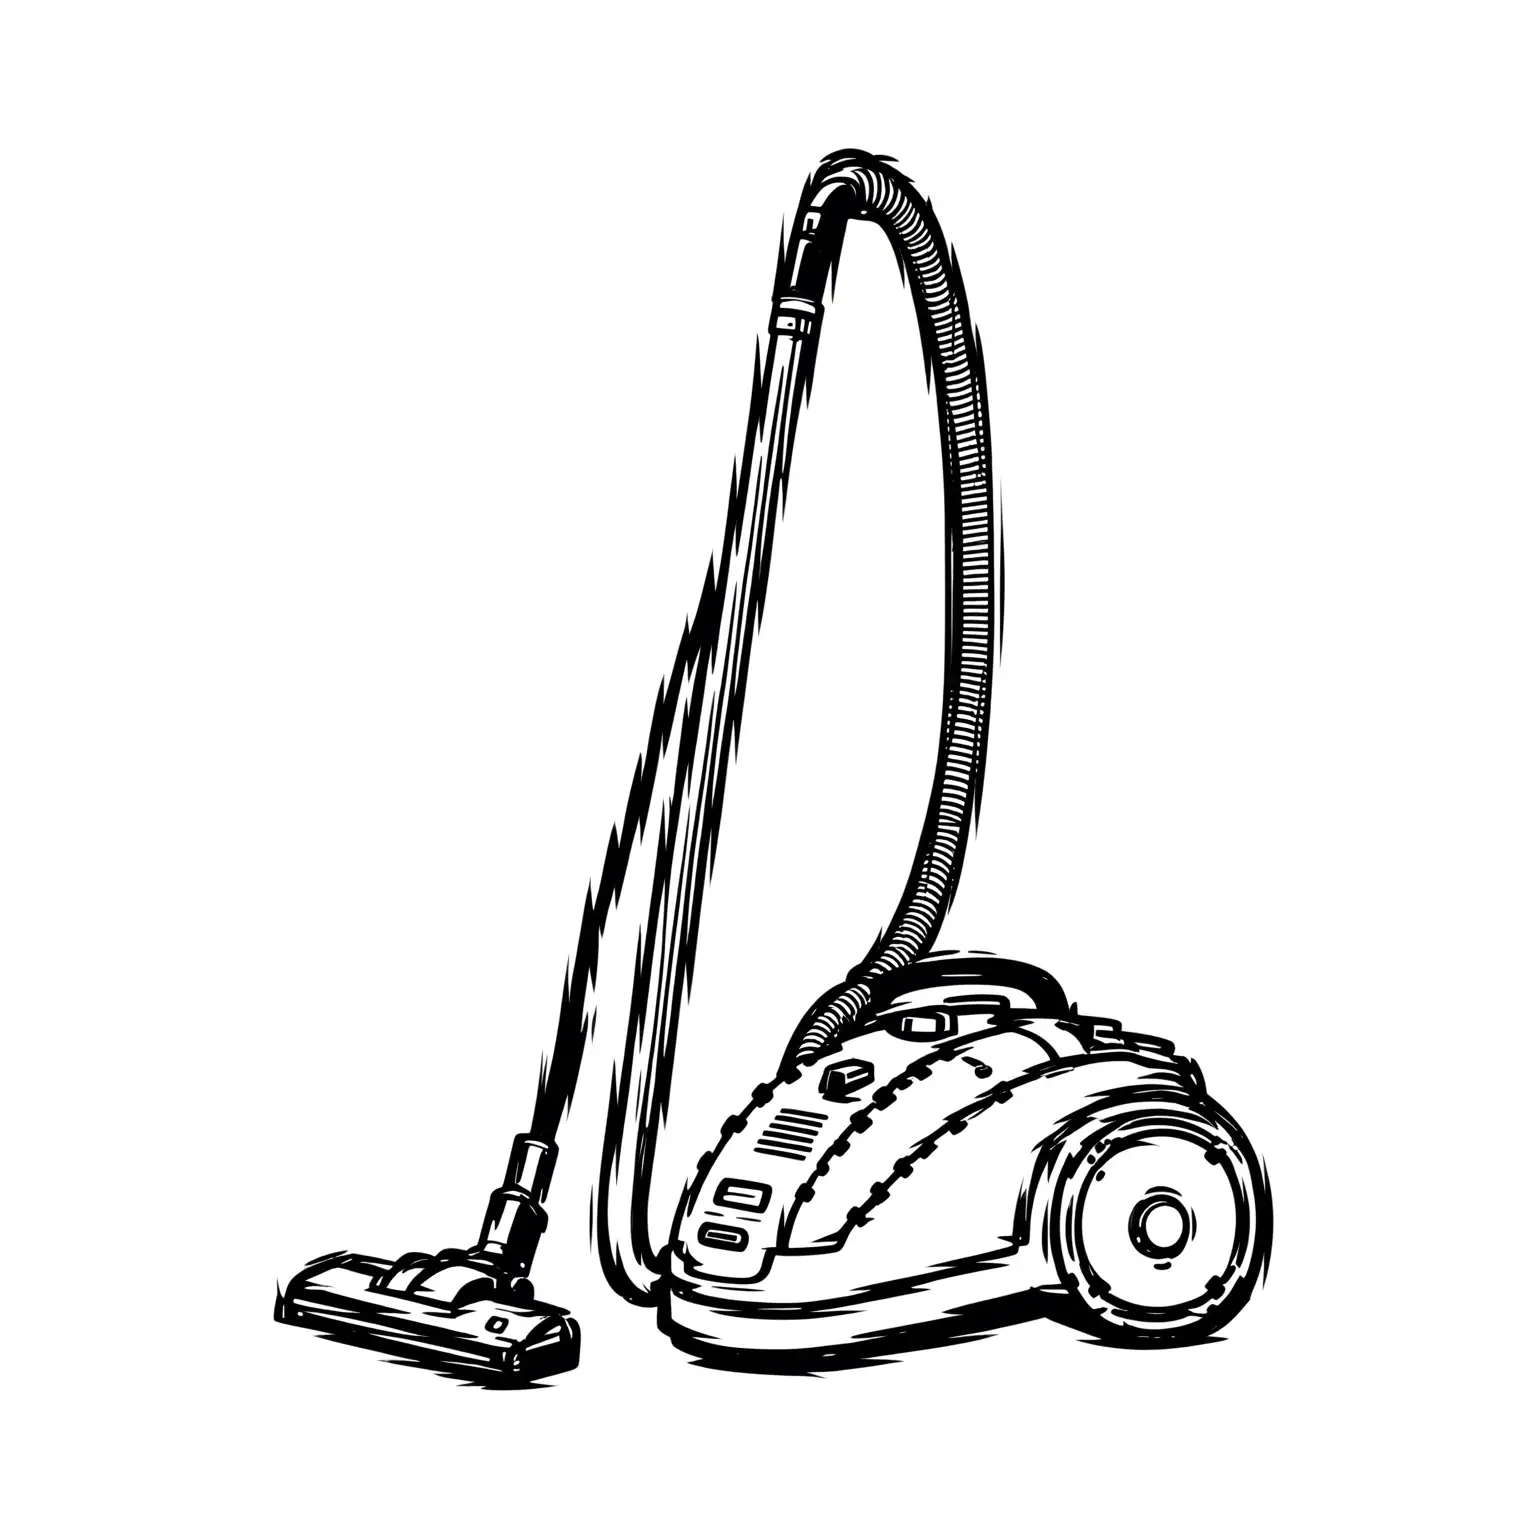 Monochrome Vacuum Cleaner Illustration on White Background